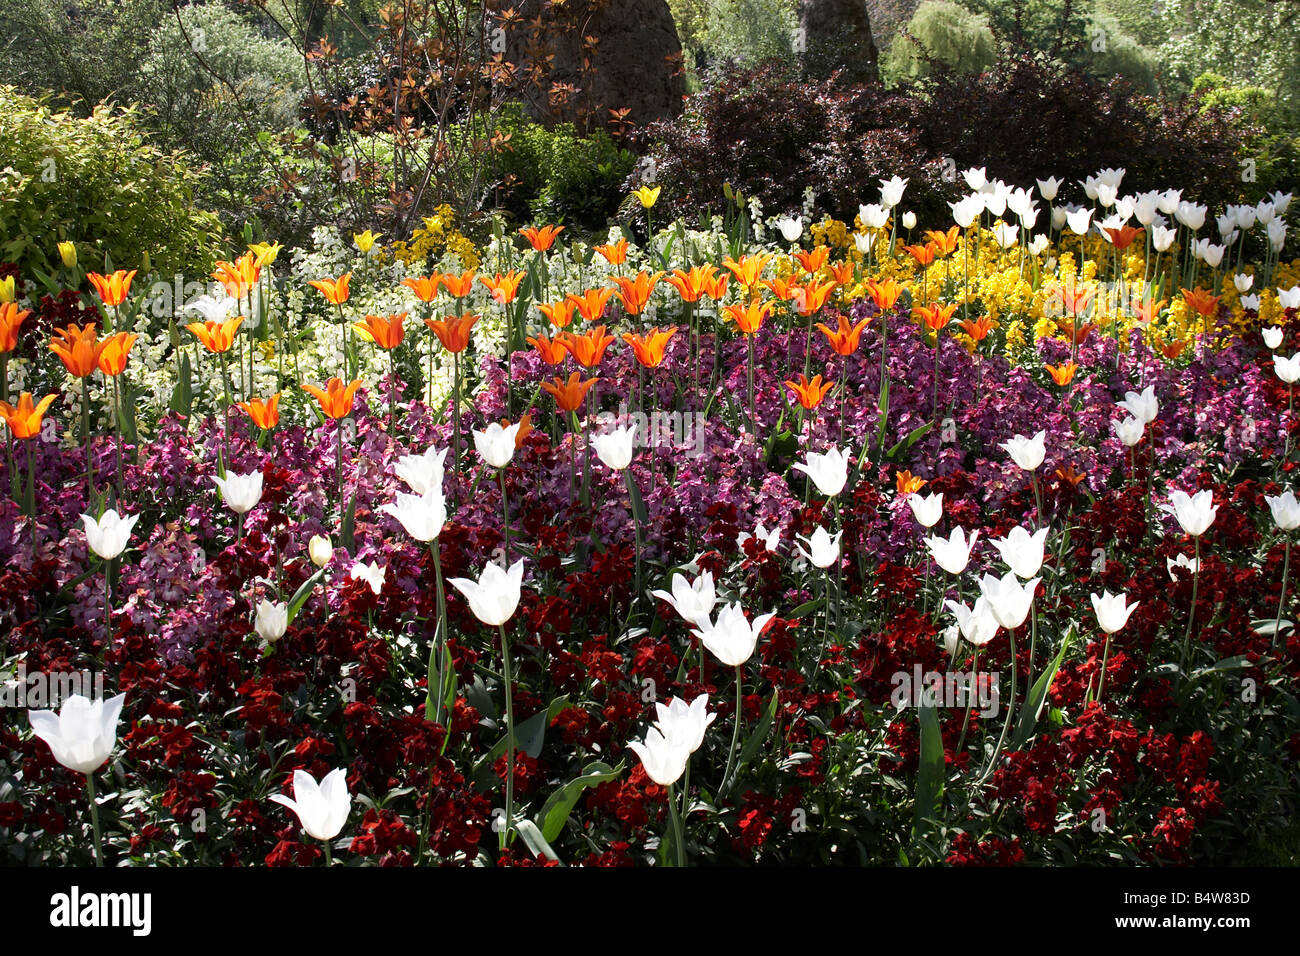 Tulip e altri letti di fiori in St James s Park City of Westminster SW1 London Inghilterra England Foto Stock